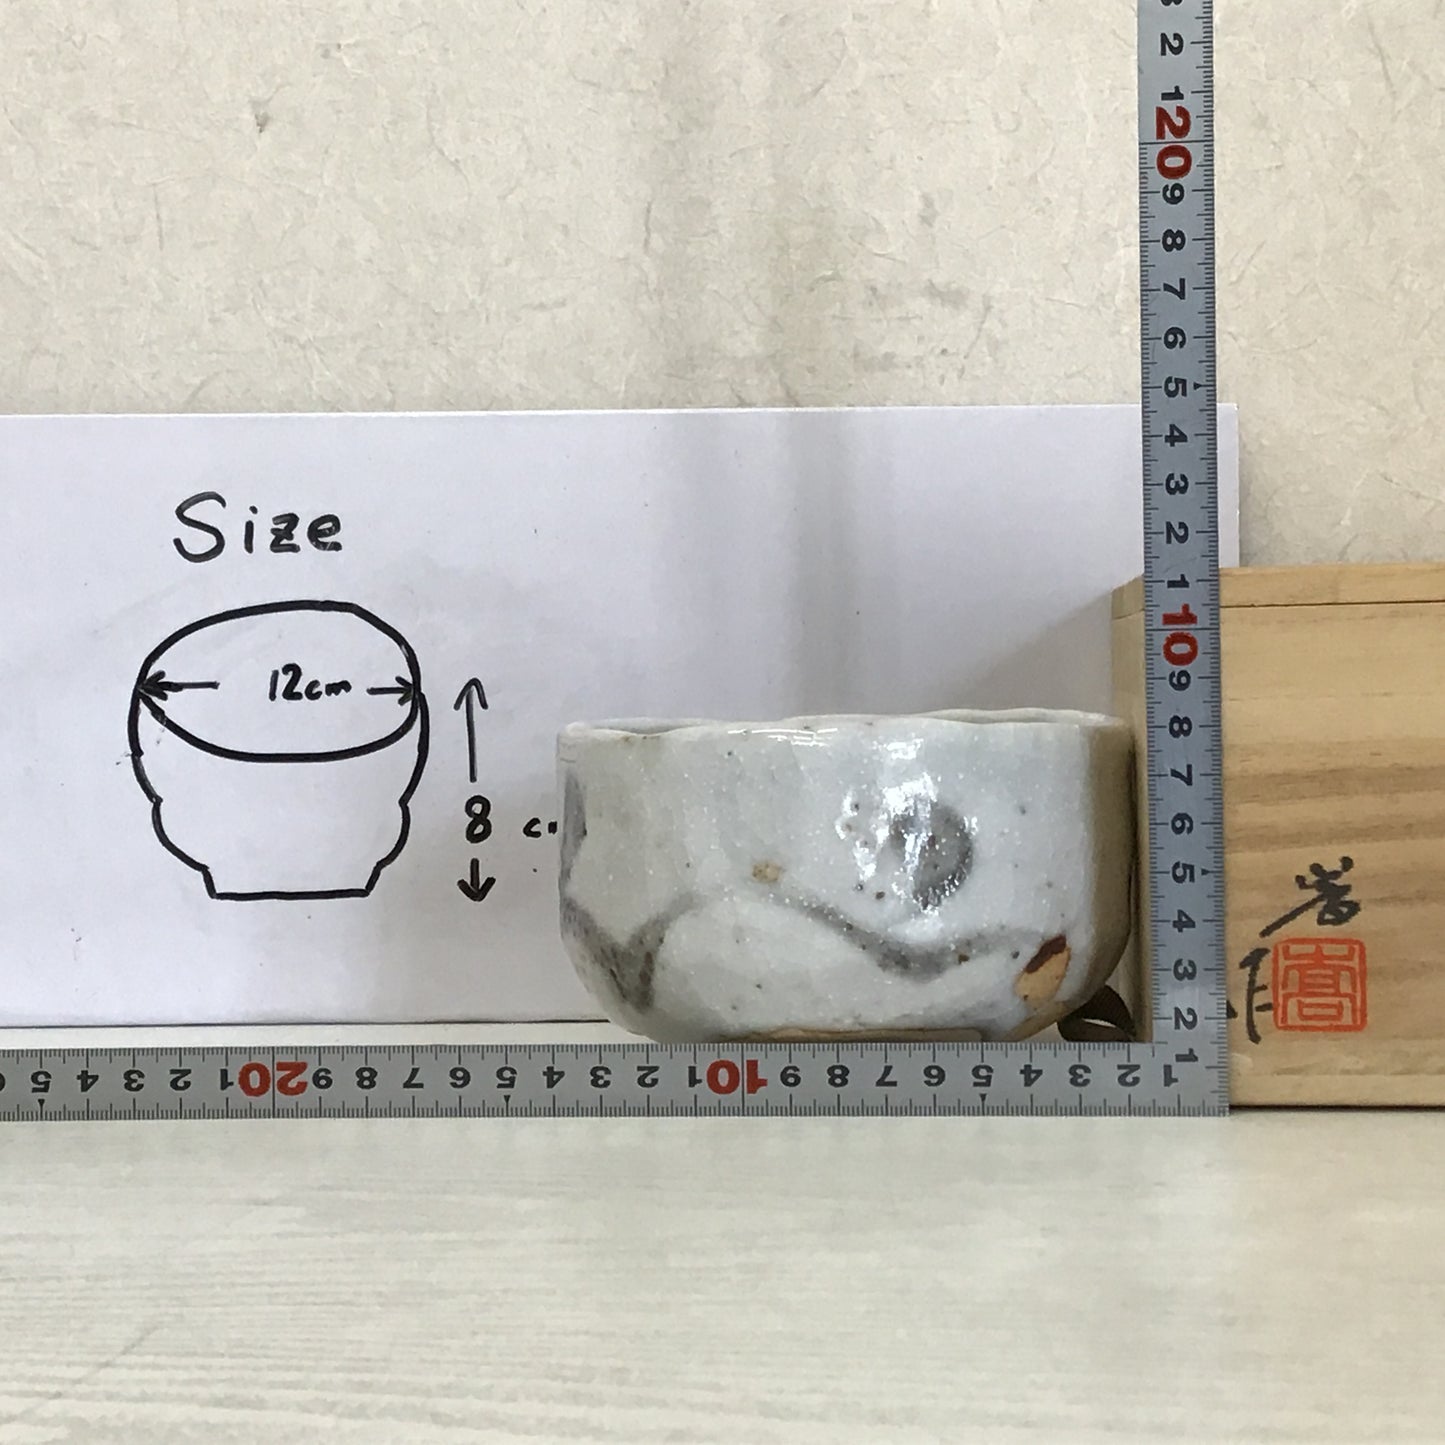 Y1576 CHAWAN Shino-ware signed box Japanese bowl pottery Japan tea ceremony